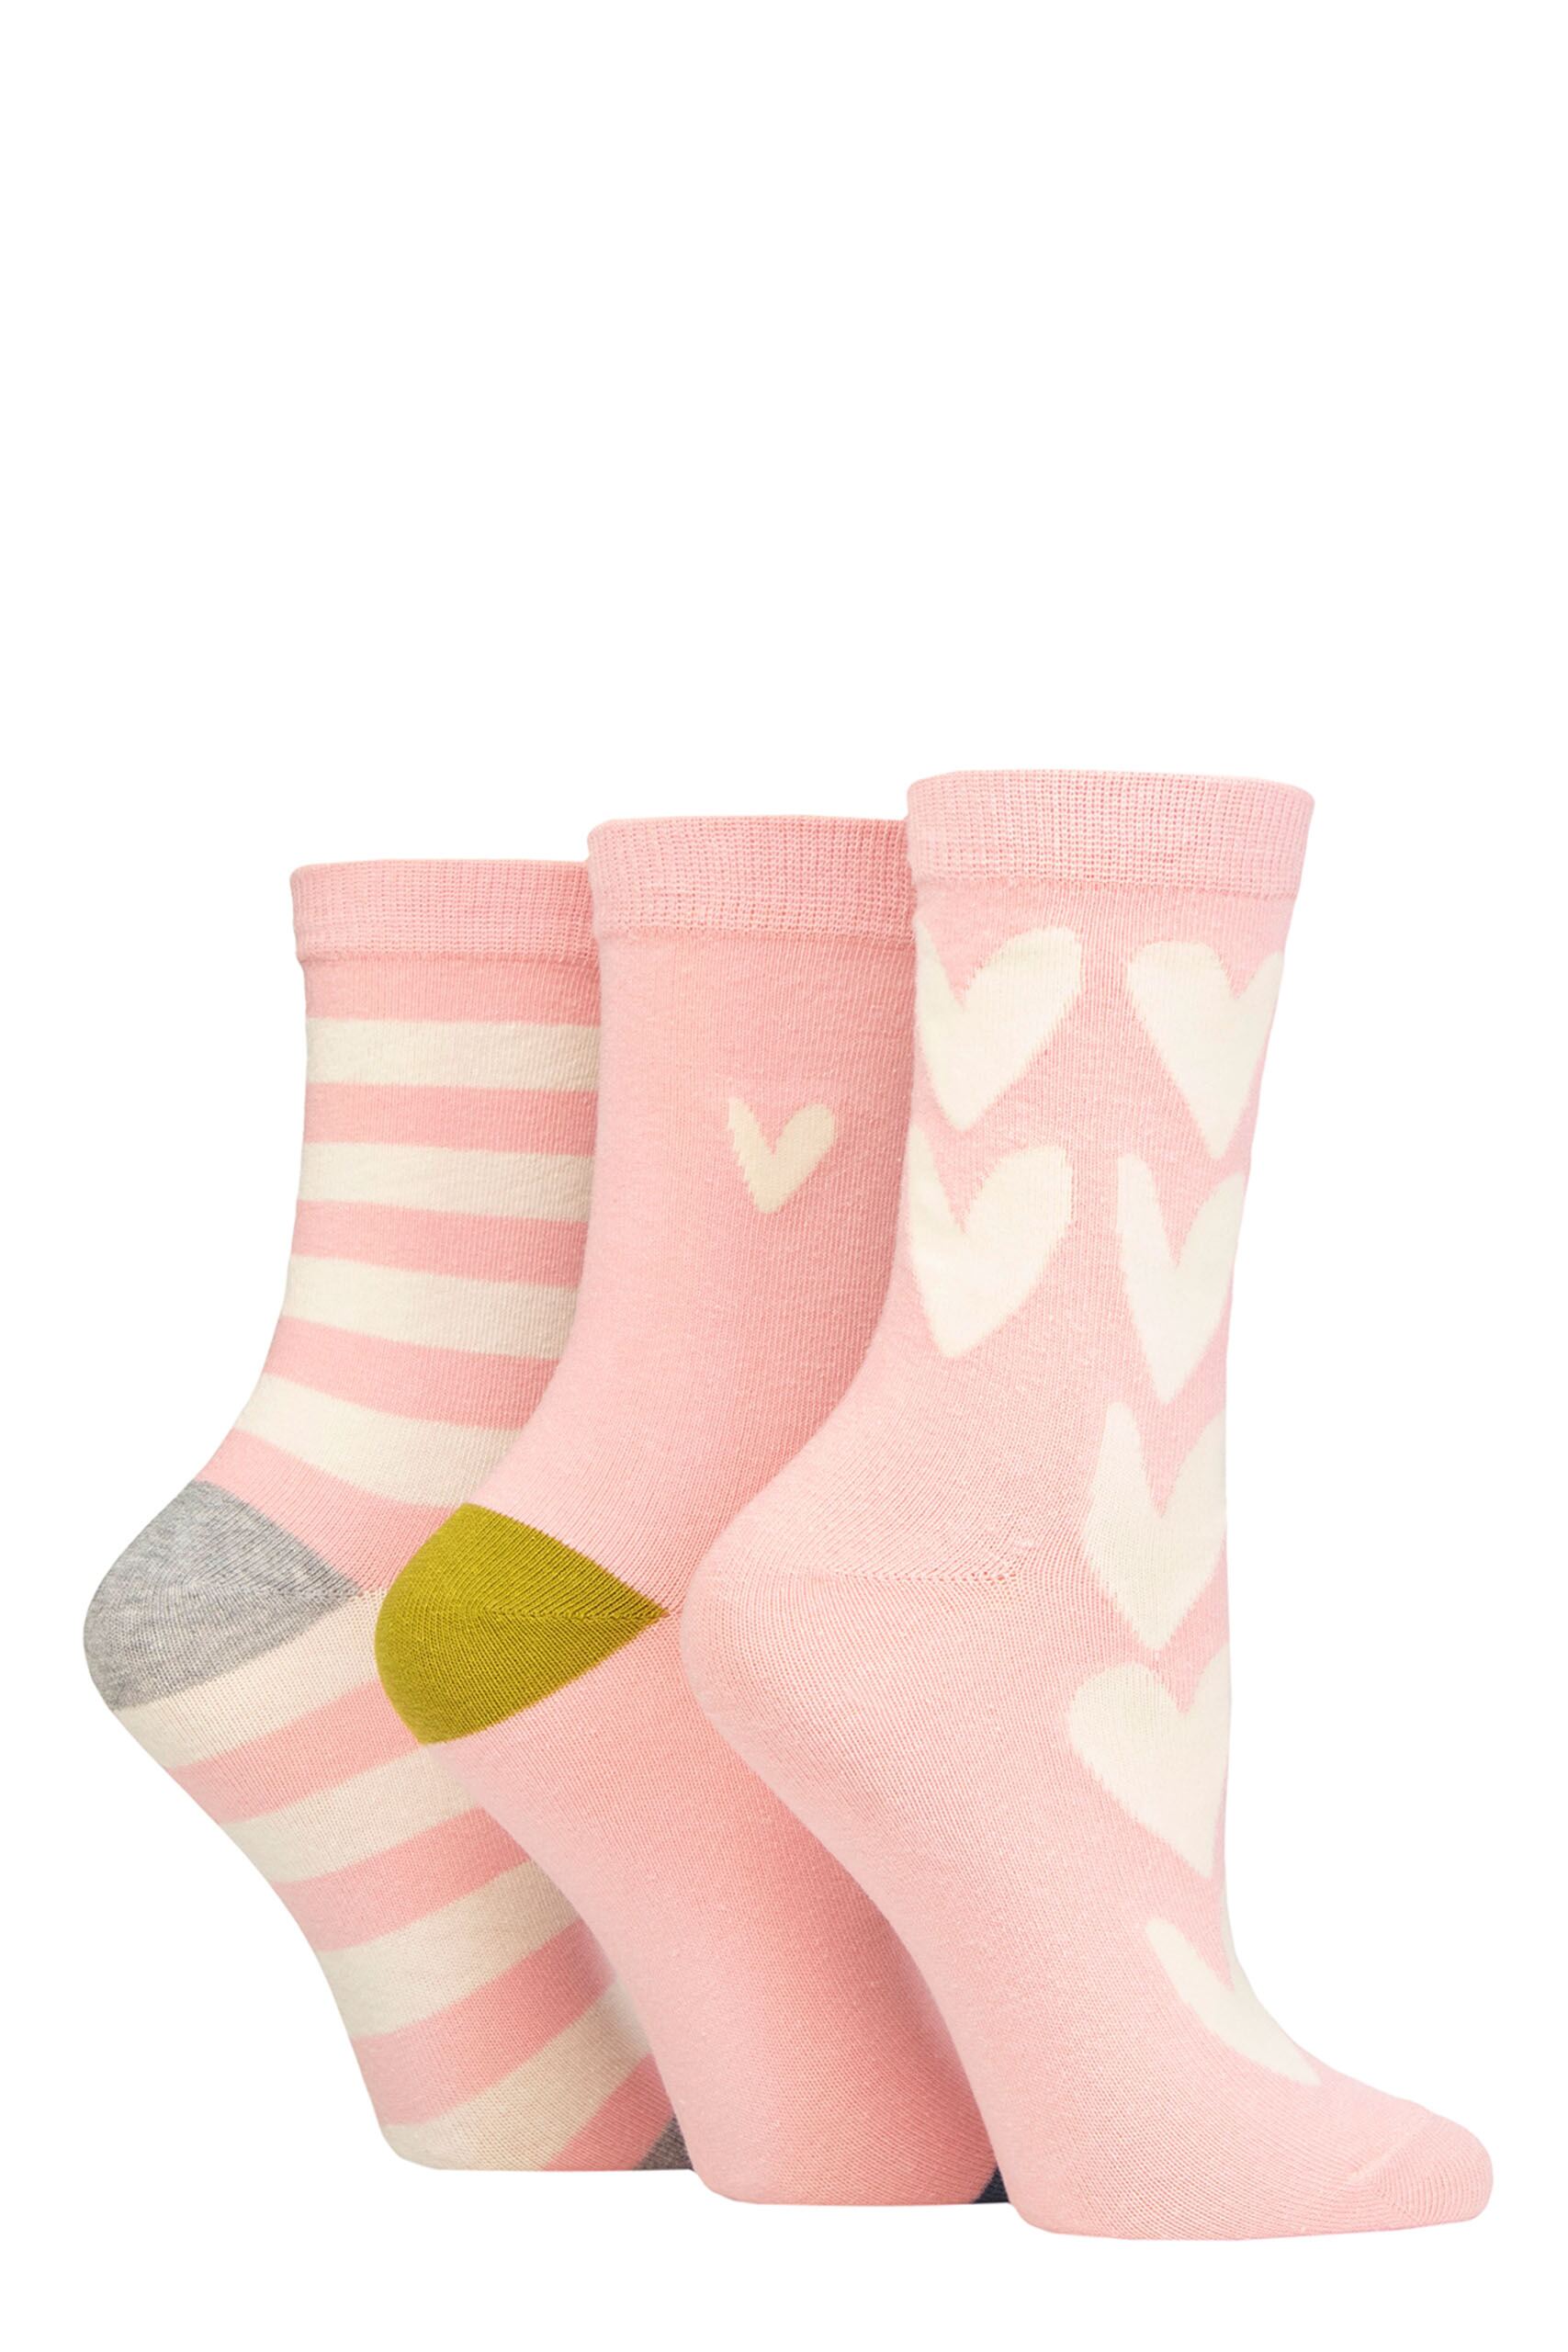 Ladies 3 Pair Caroline Gardner Patterned Cotton Socks All Over Hearts Pink UK 4-8